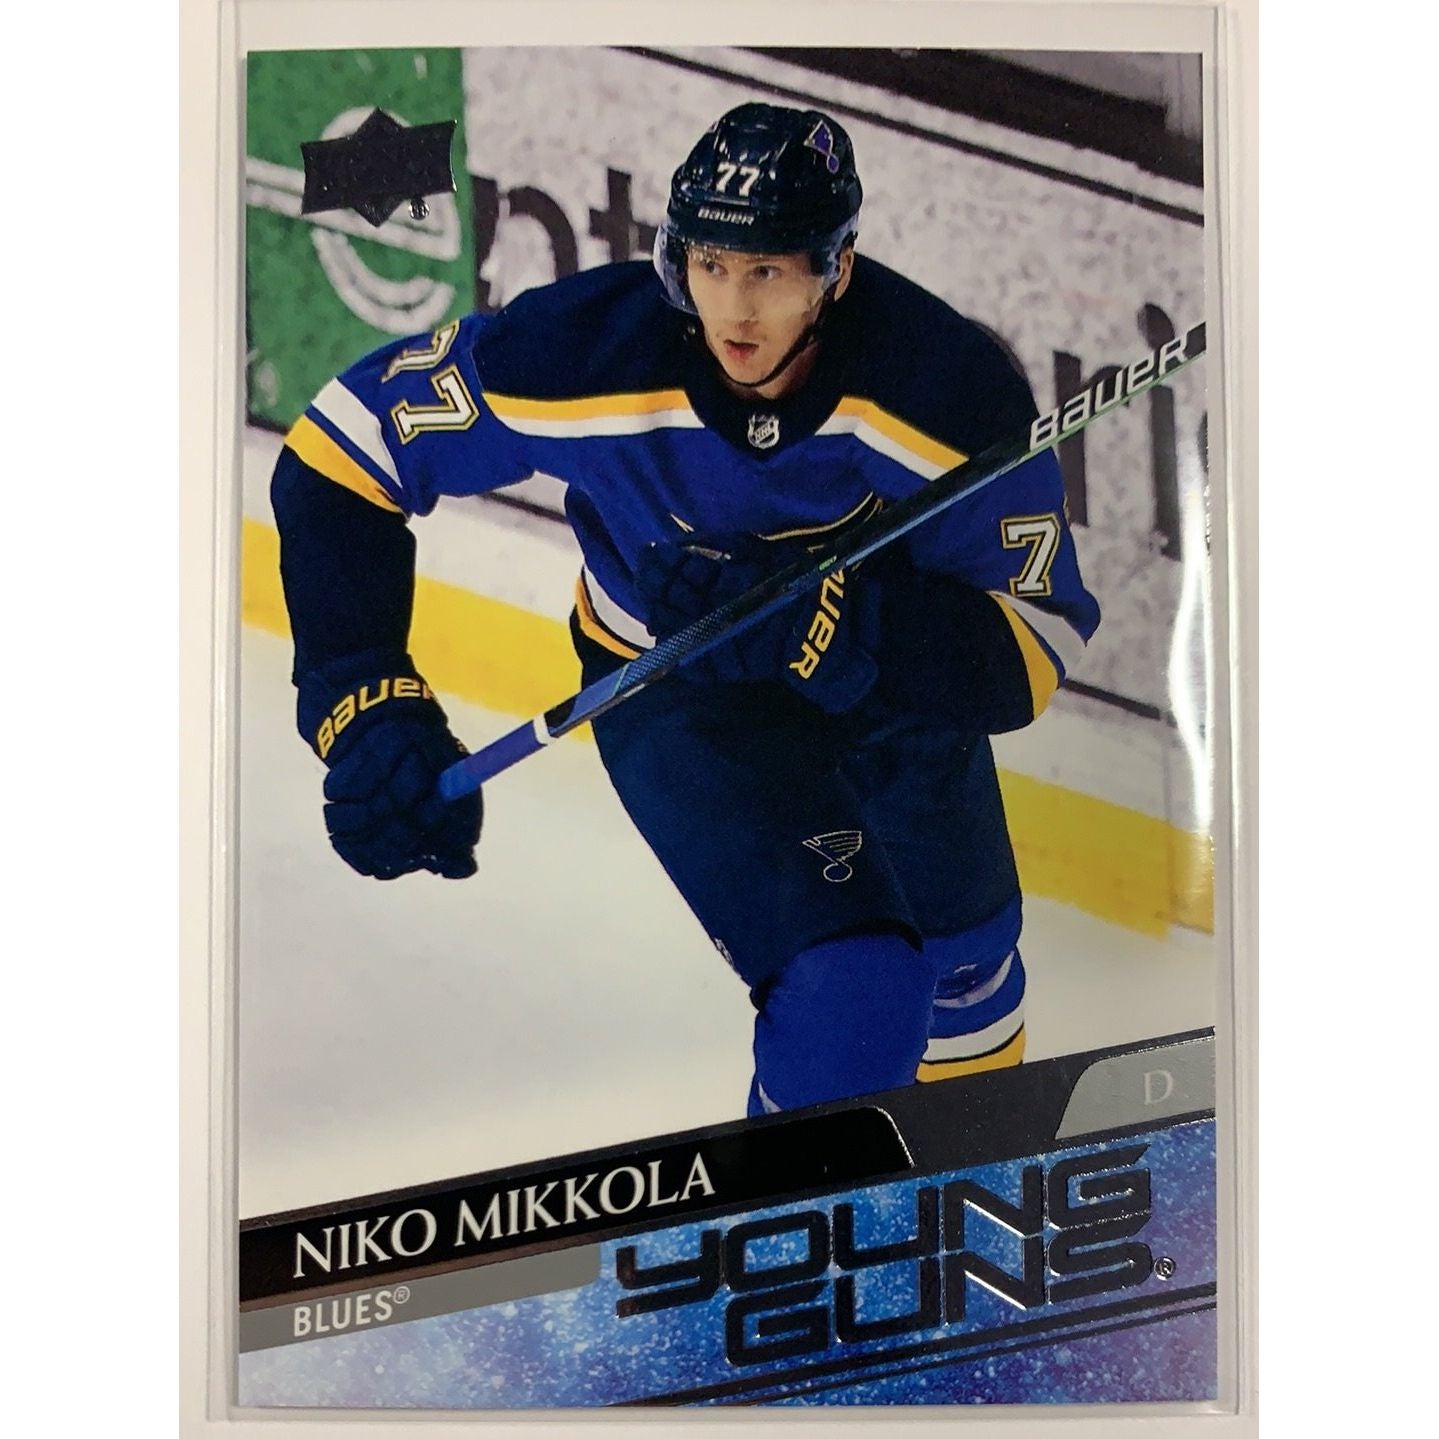  2020-21 Upper Deck Series 2 Niko Mikkola Young Guns  Local Legends Cards & Collectibles